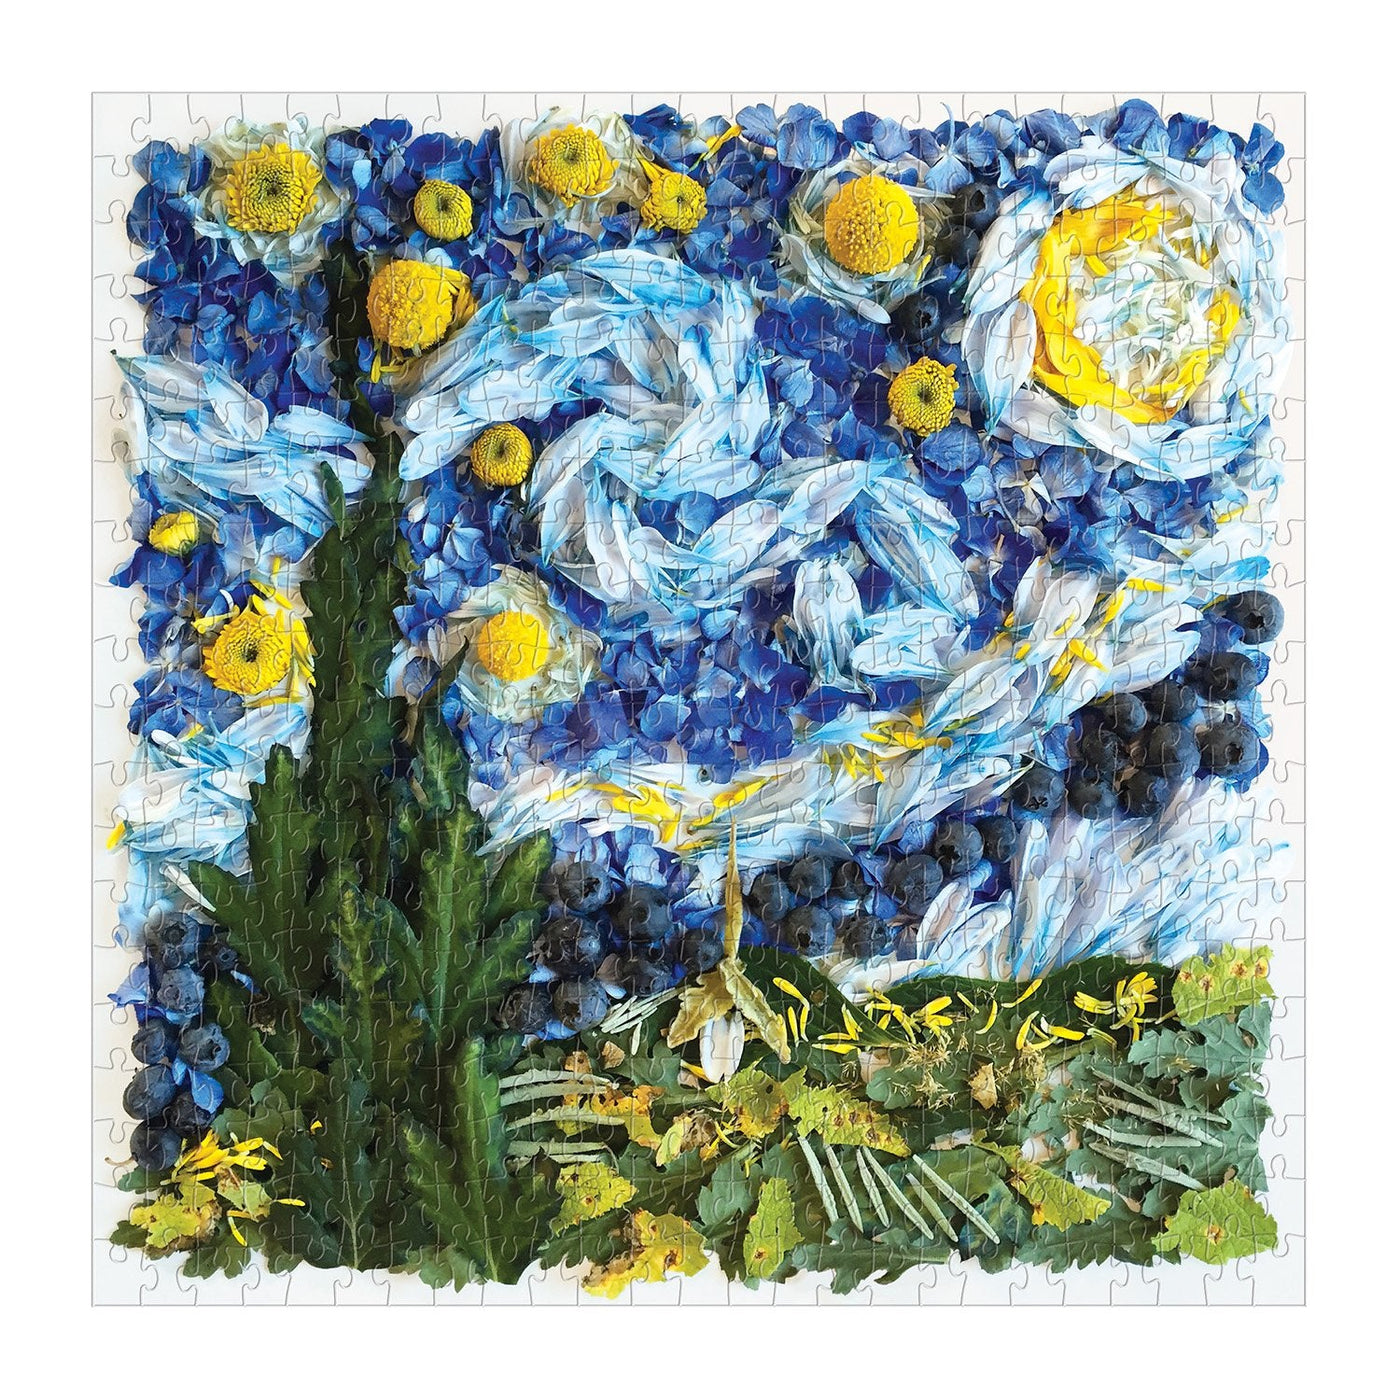 Starry Night Petals | 500 Piece Jigsaw Puzzle